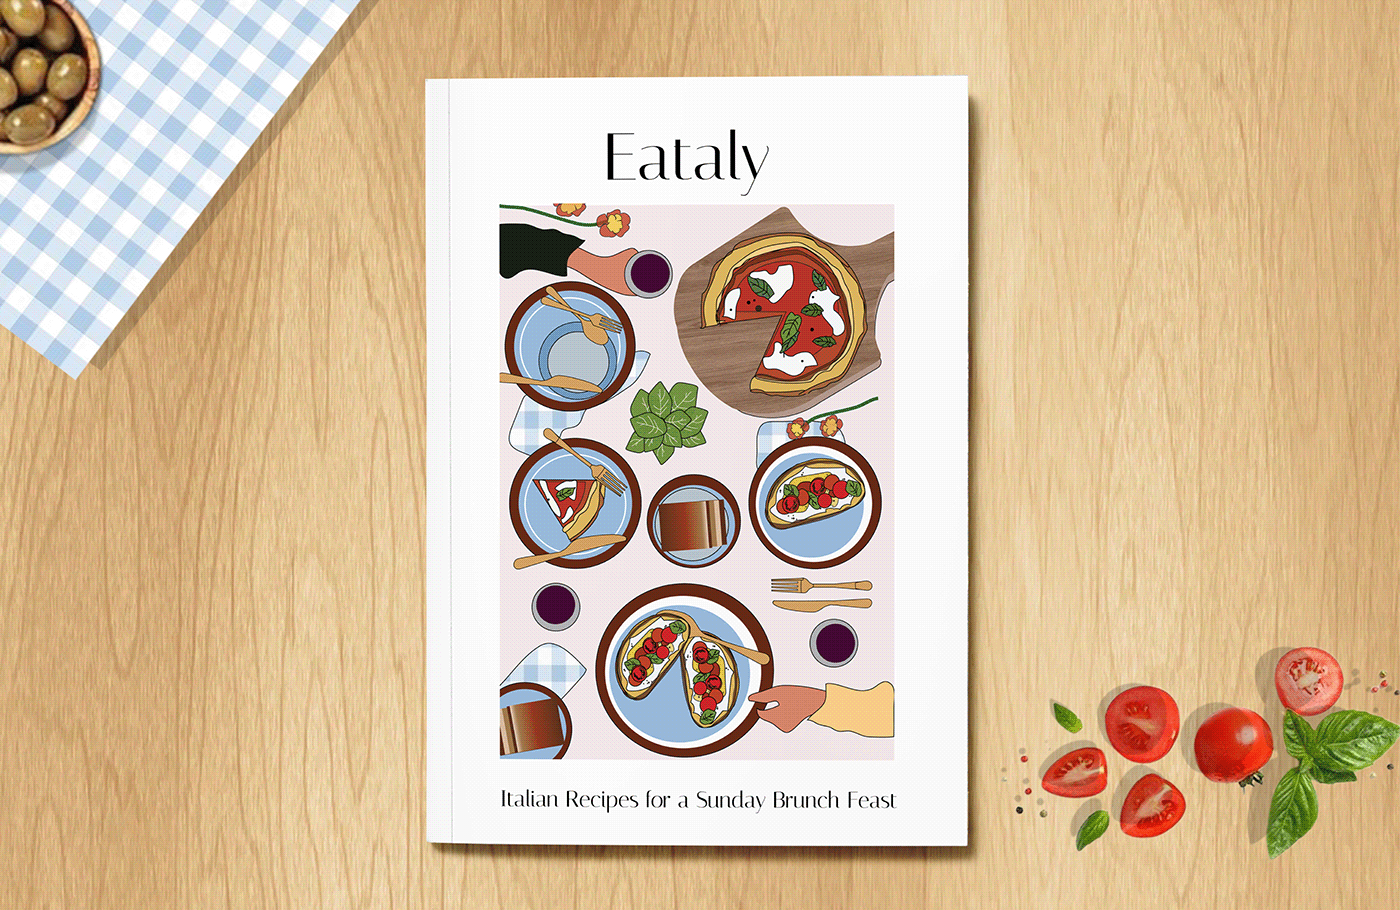 publication design InDesign editorial design  Layout adobe illustrator graphic design  cookbook Cookbook Design book design visual design